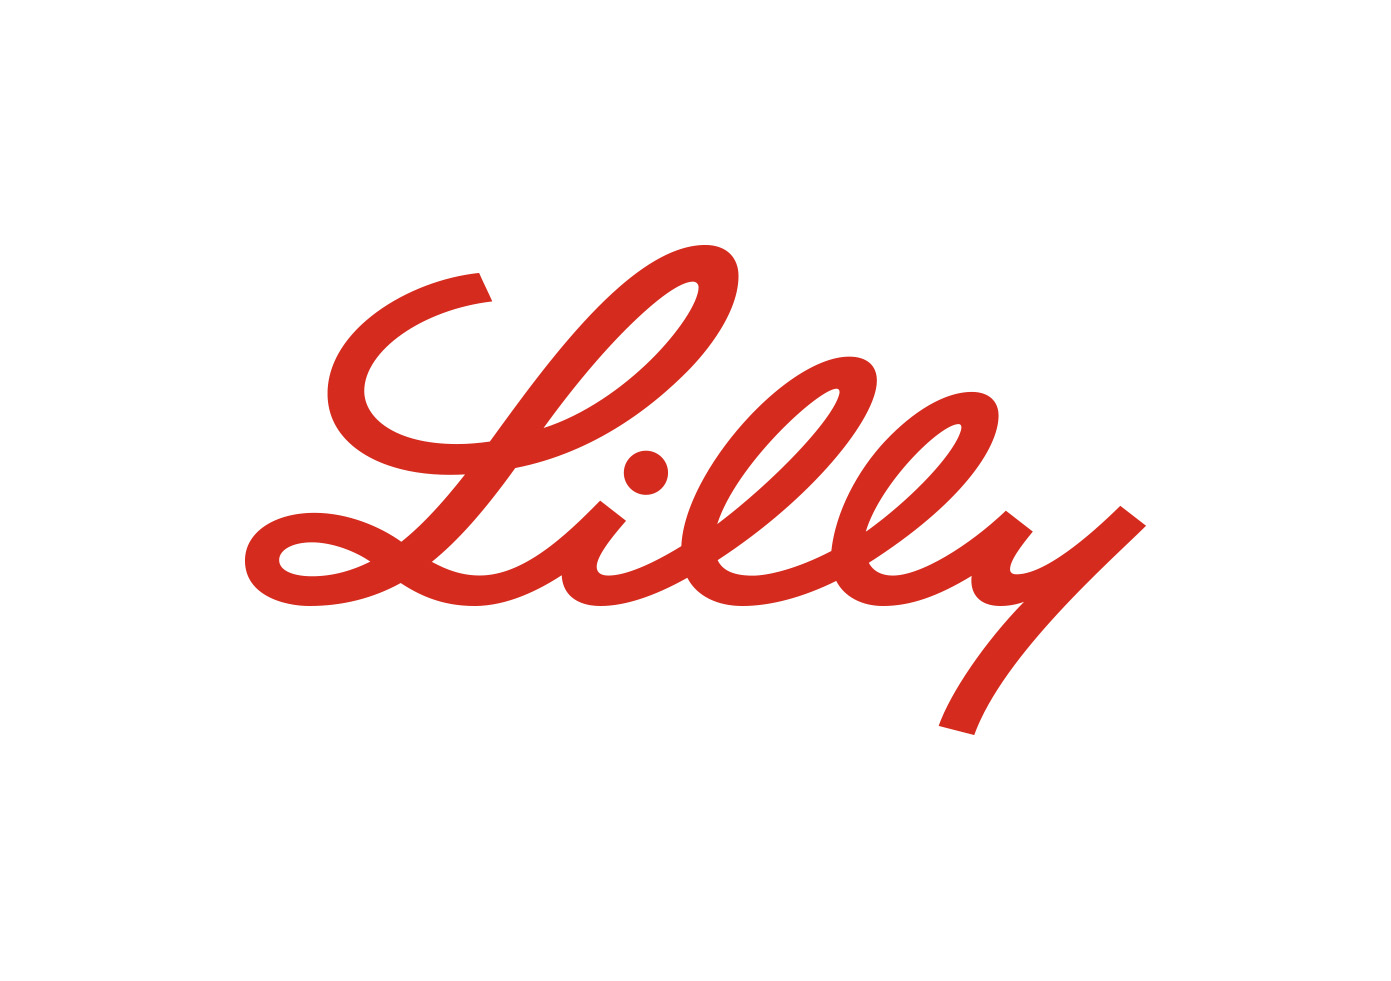 A. Eli Lilly & Company (Presenting)